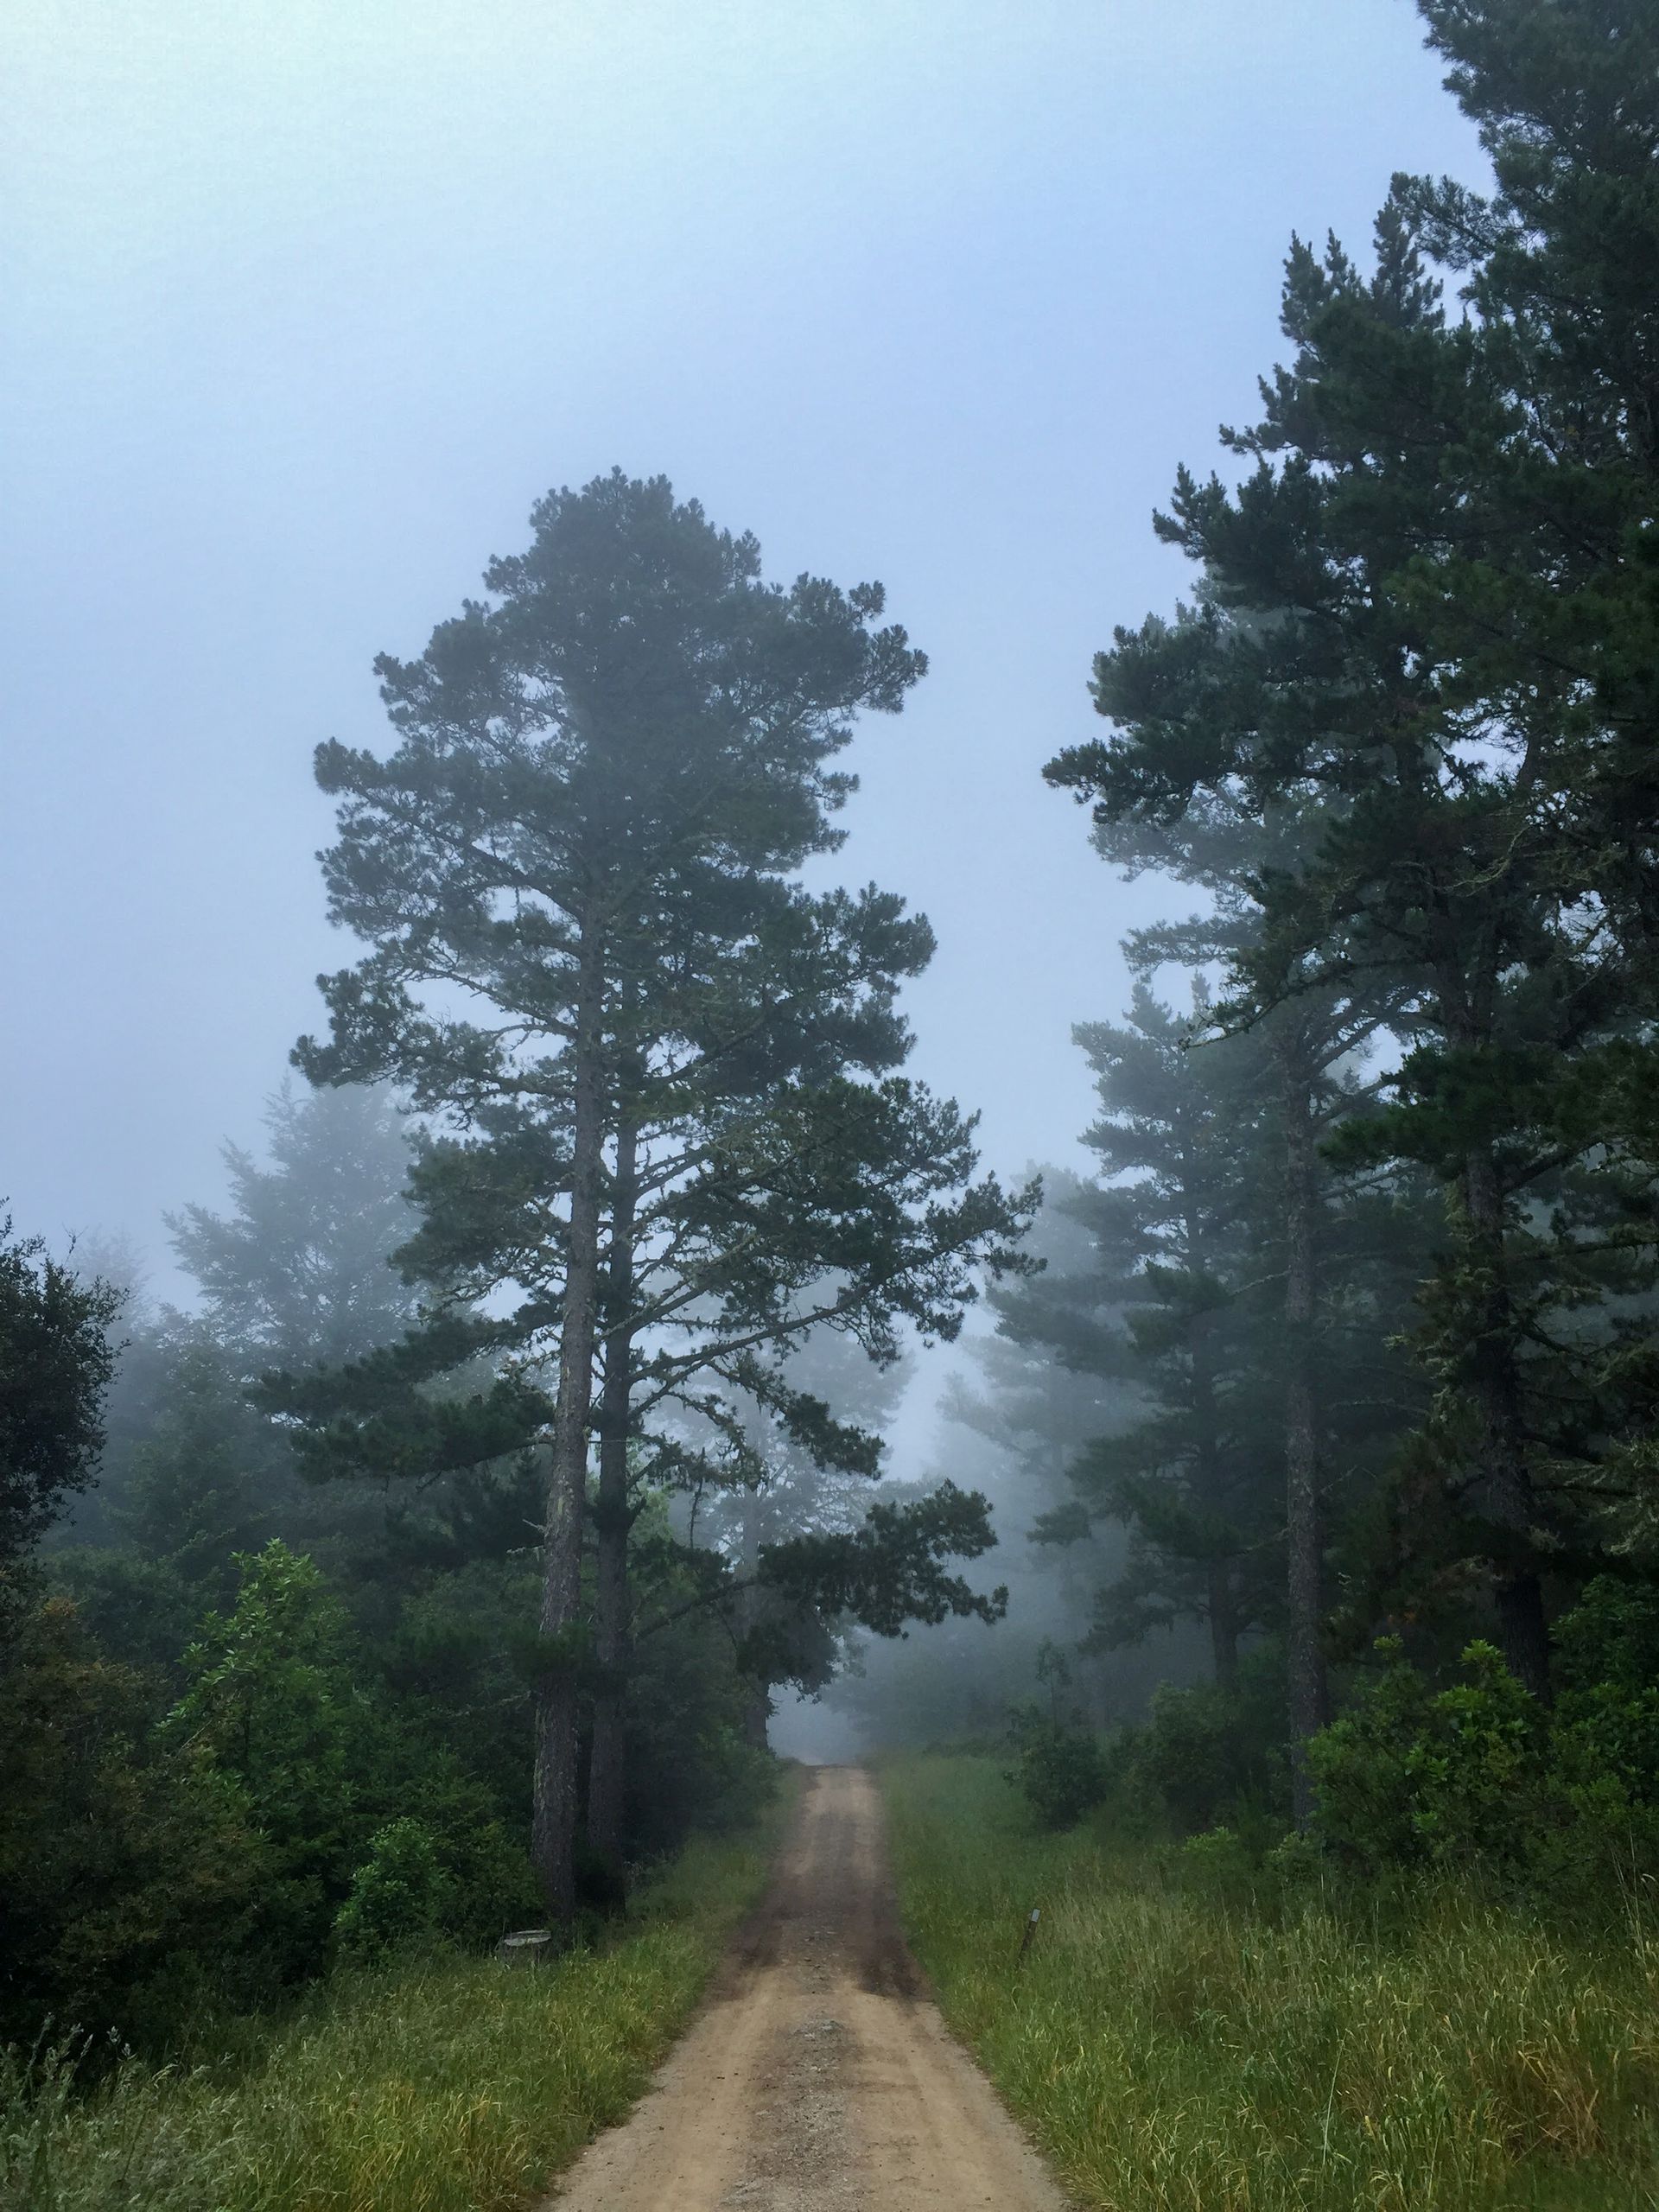 a dirt road going through a foggy forest